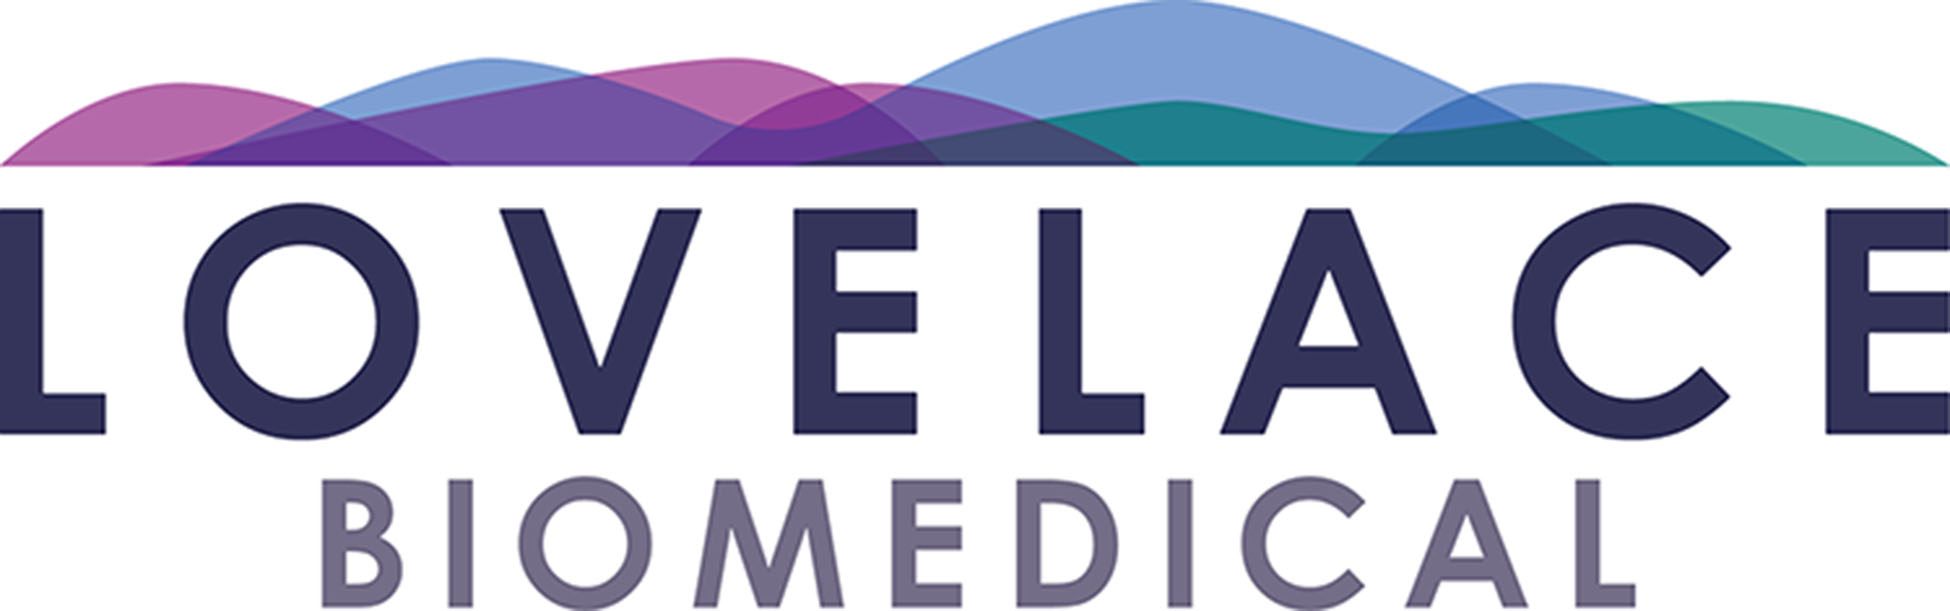 Лавлейс биомедицинский логотип